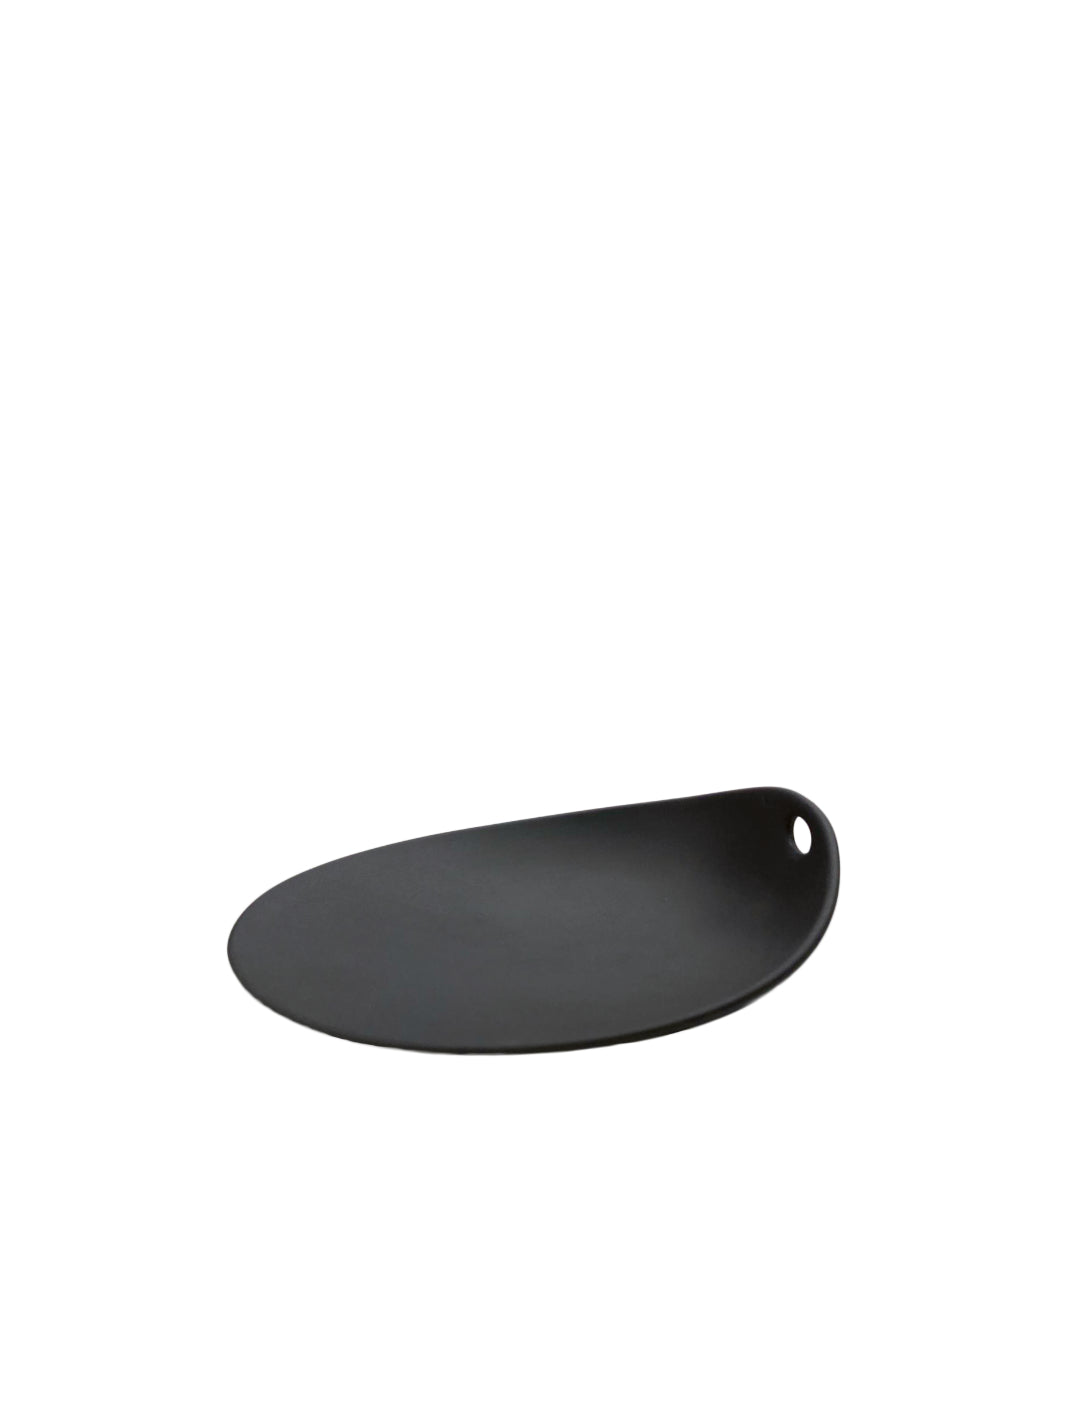 COOKPLAY Jomon Small Plate (14x11cm/5.5x4.3in)